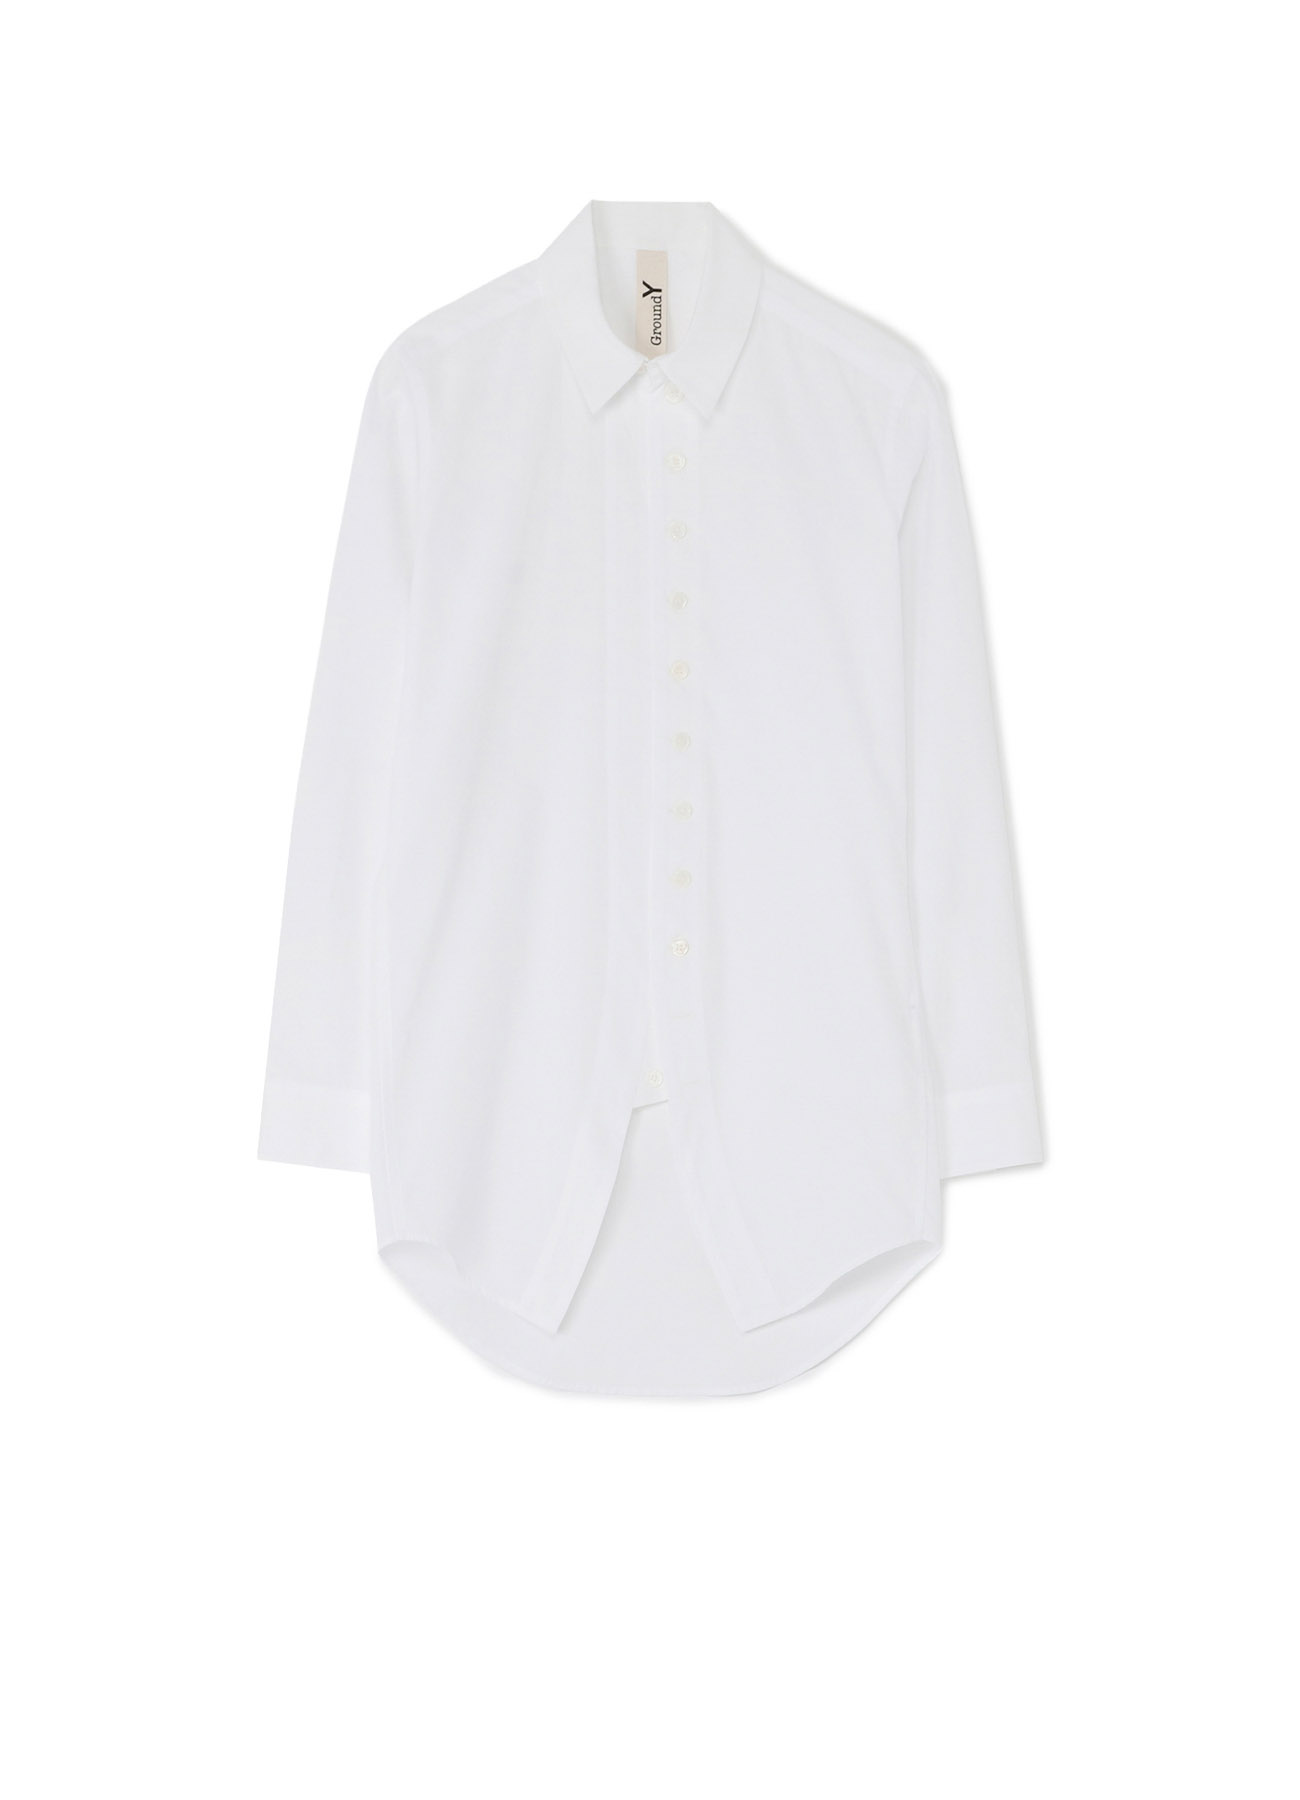 100/2 cotton broad Napoleon shirt